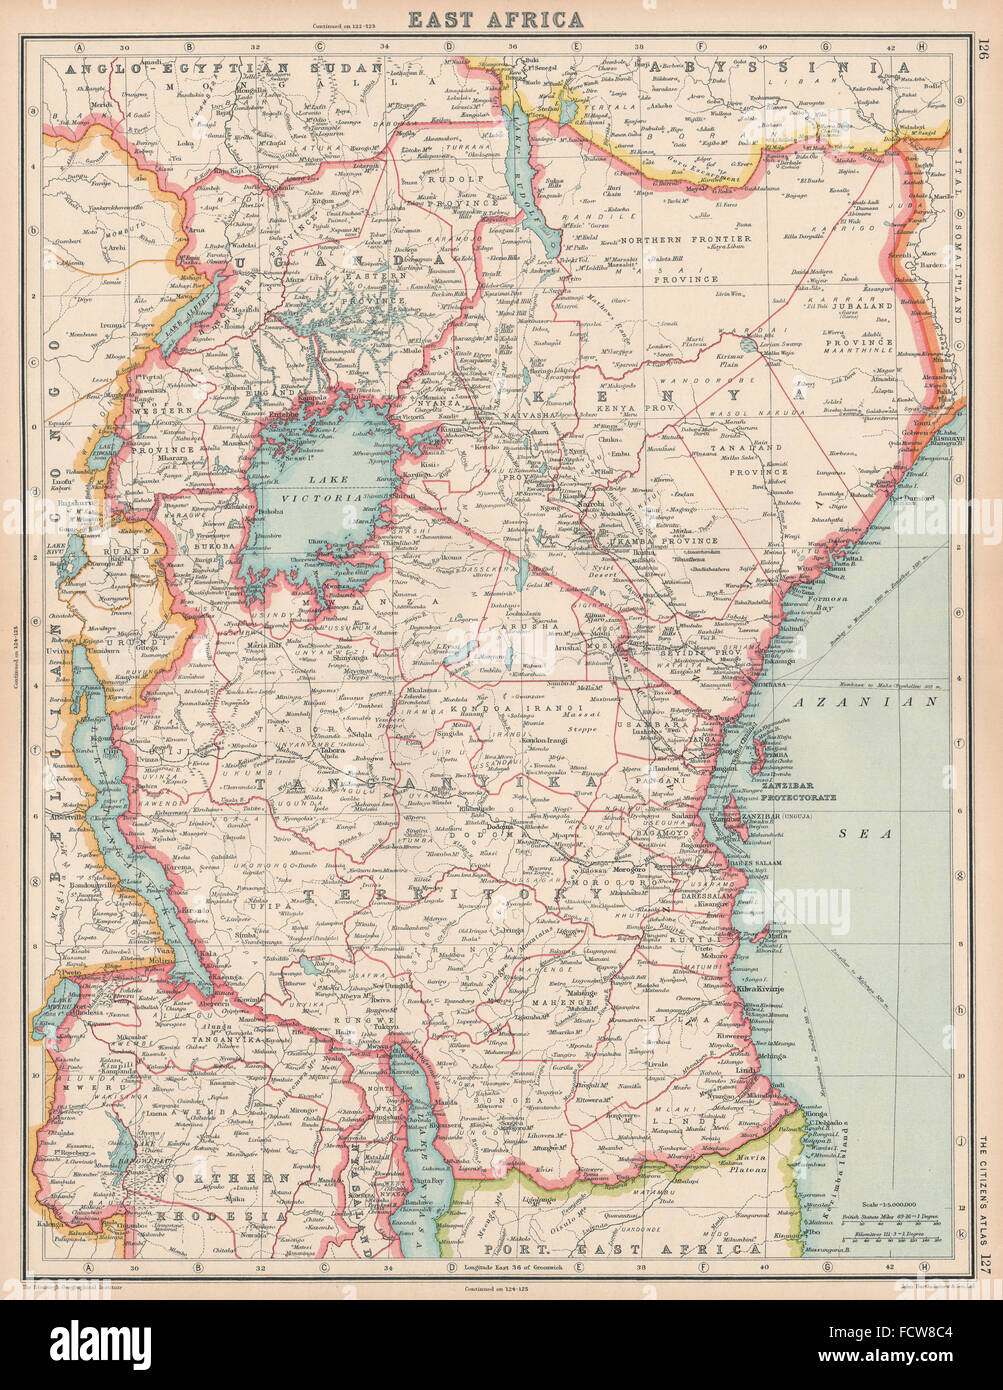 EAST AFRICA: Kenya Uganda Tangyanika Territory & Zanzibar Protectorate, 1924 map Stock Photo